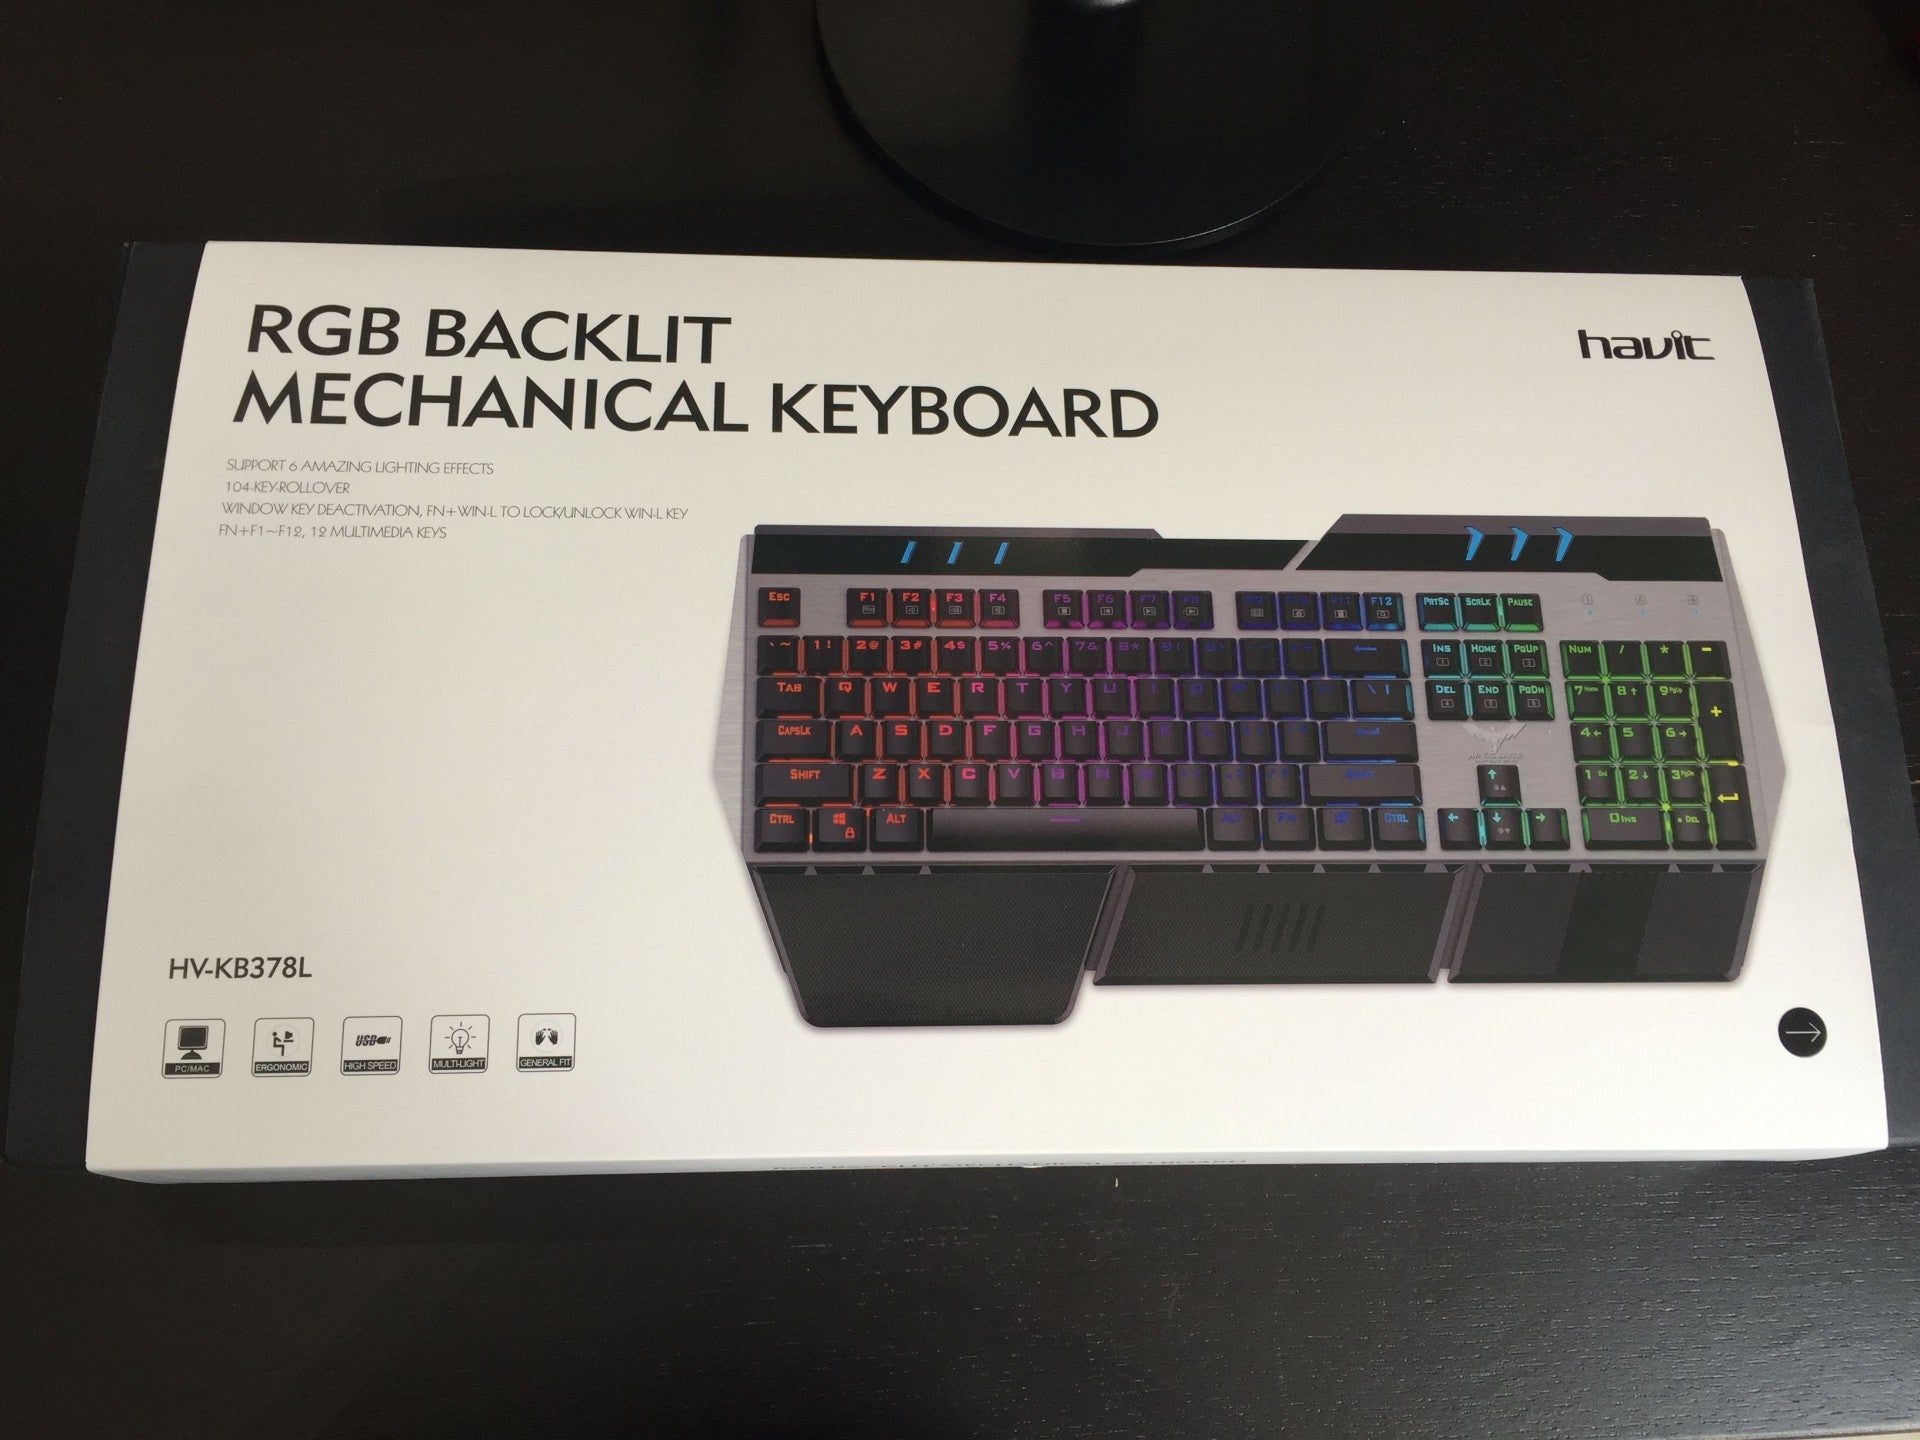 The package of HV-KB378L mechanical keyboard